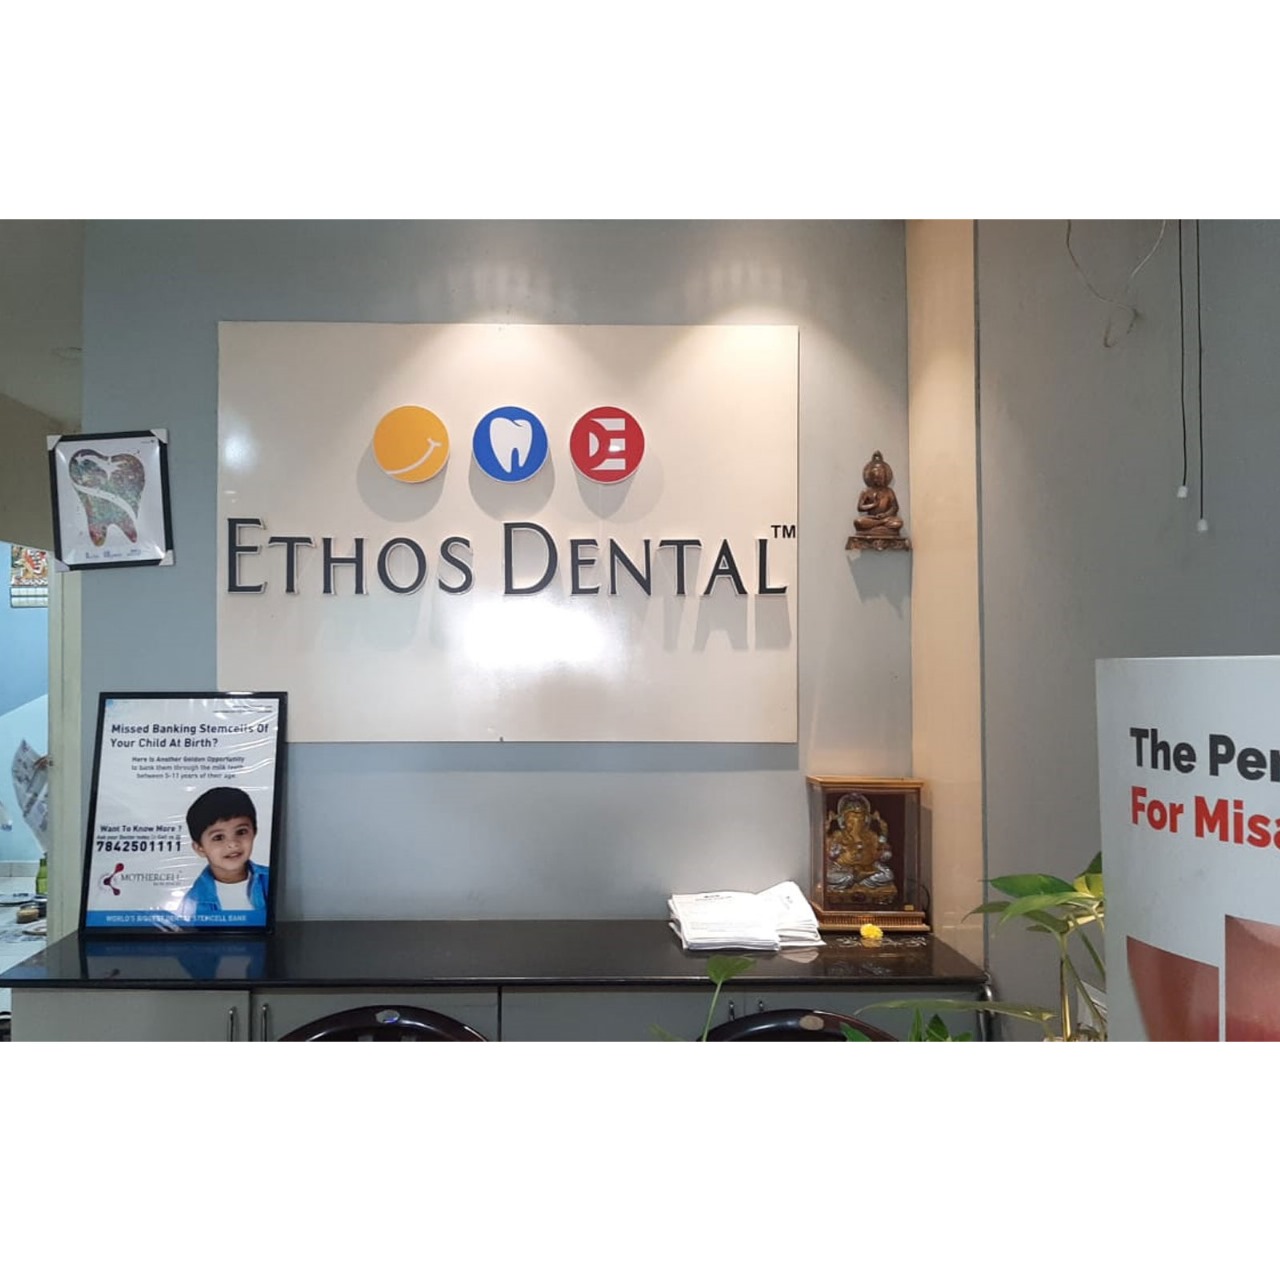 Our new happy customer @ Ethos Dental